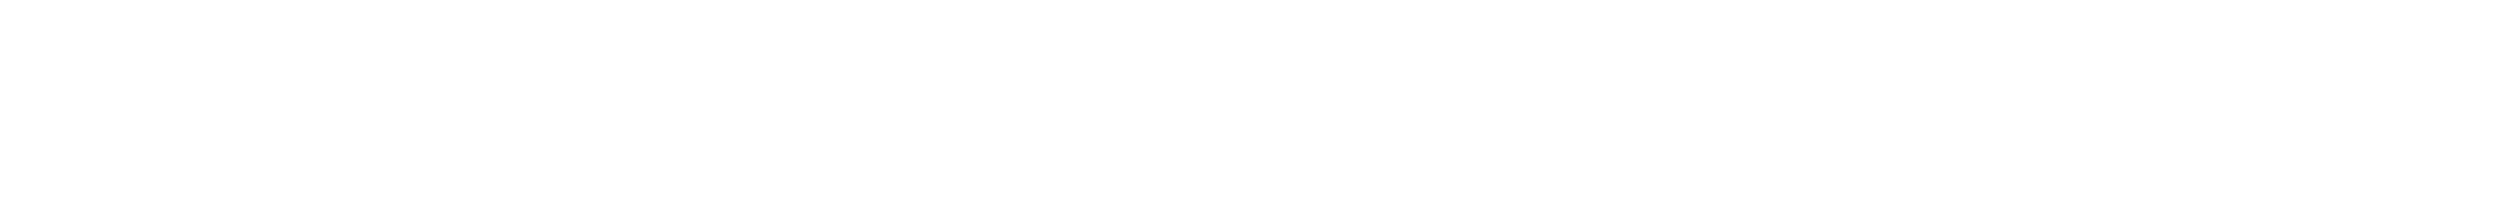 Logo-Text